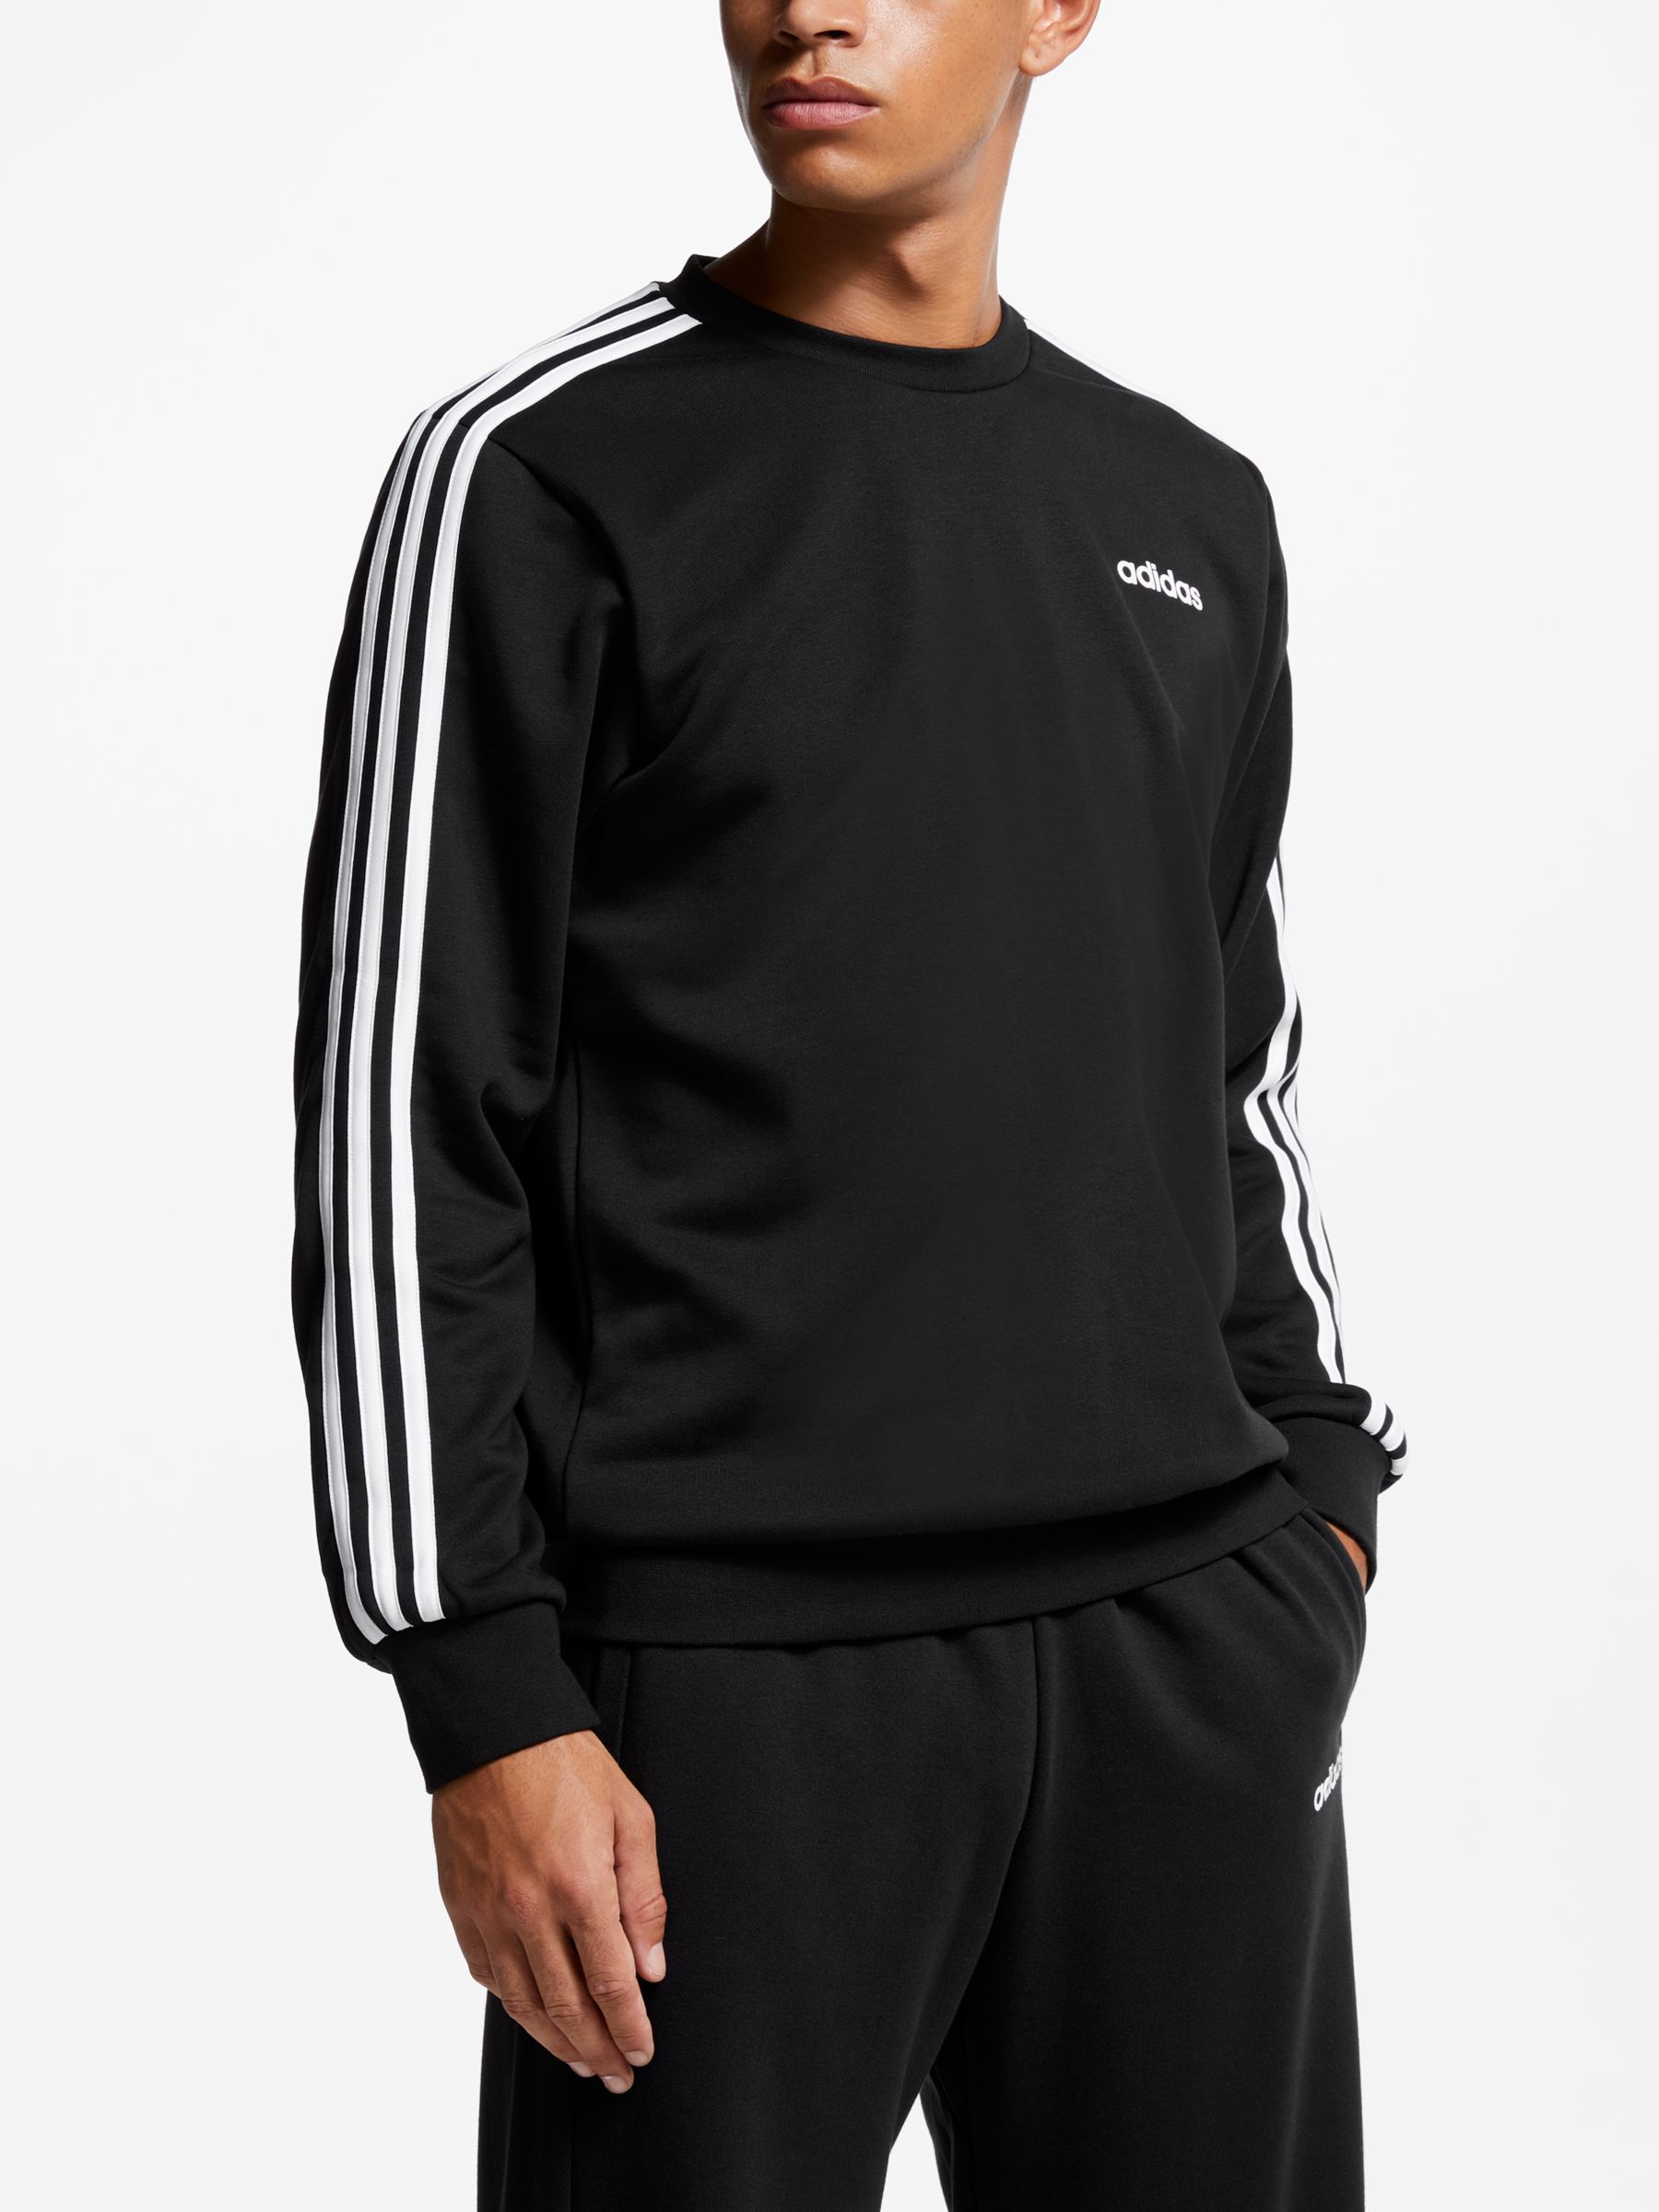 adidas Essentials 3-Stripes Sweatshirt, Black/White